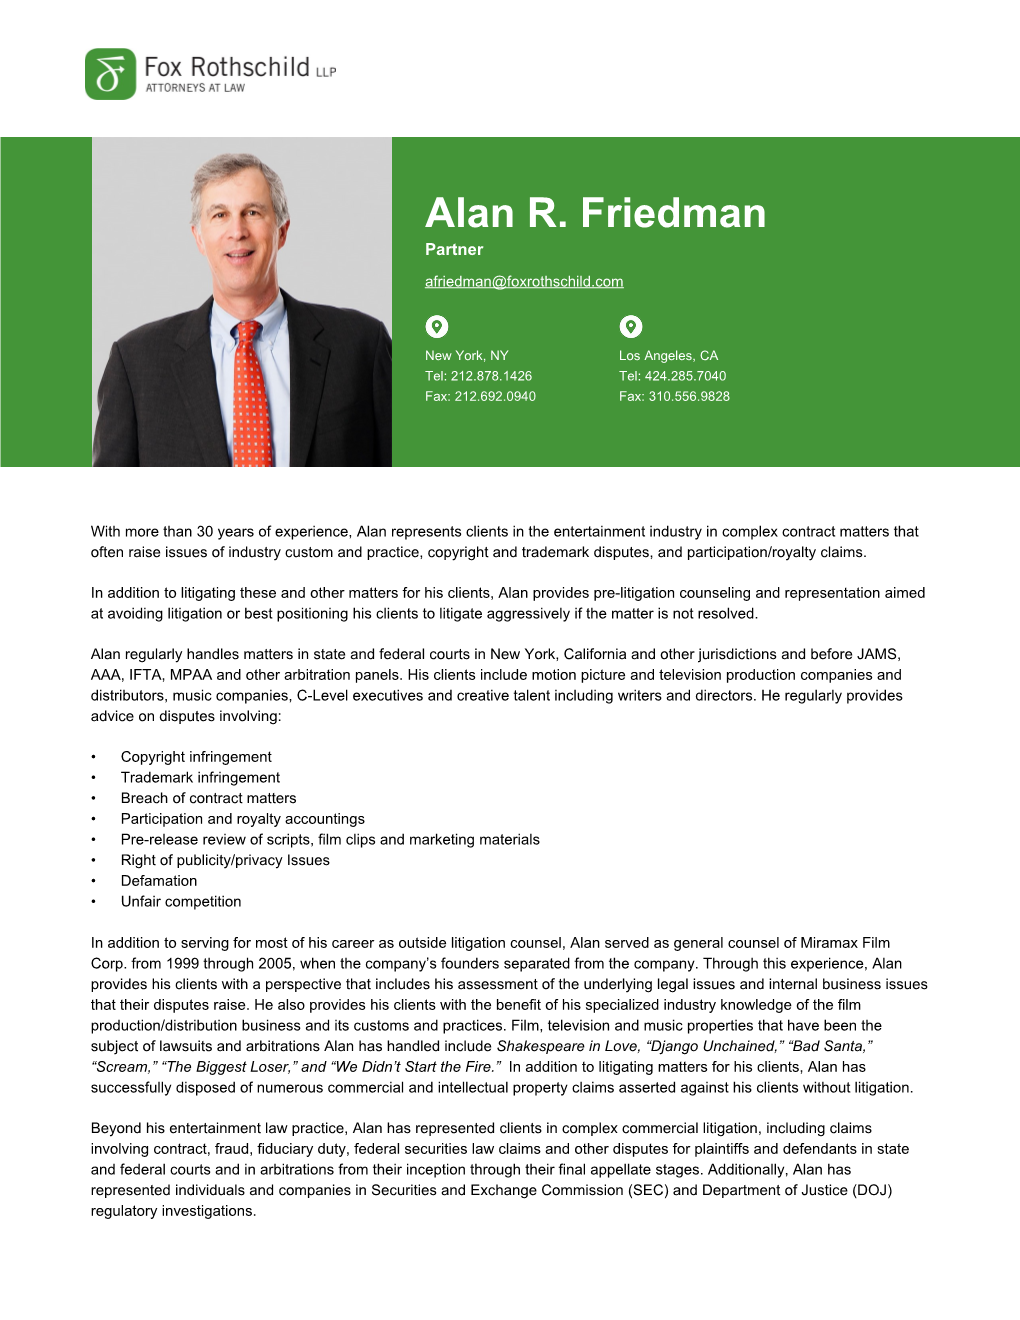 Alan R. Friedman Partner